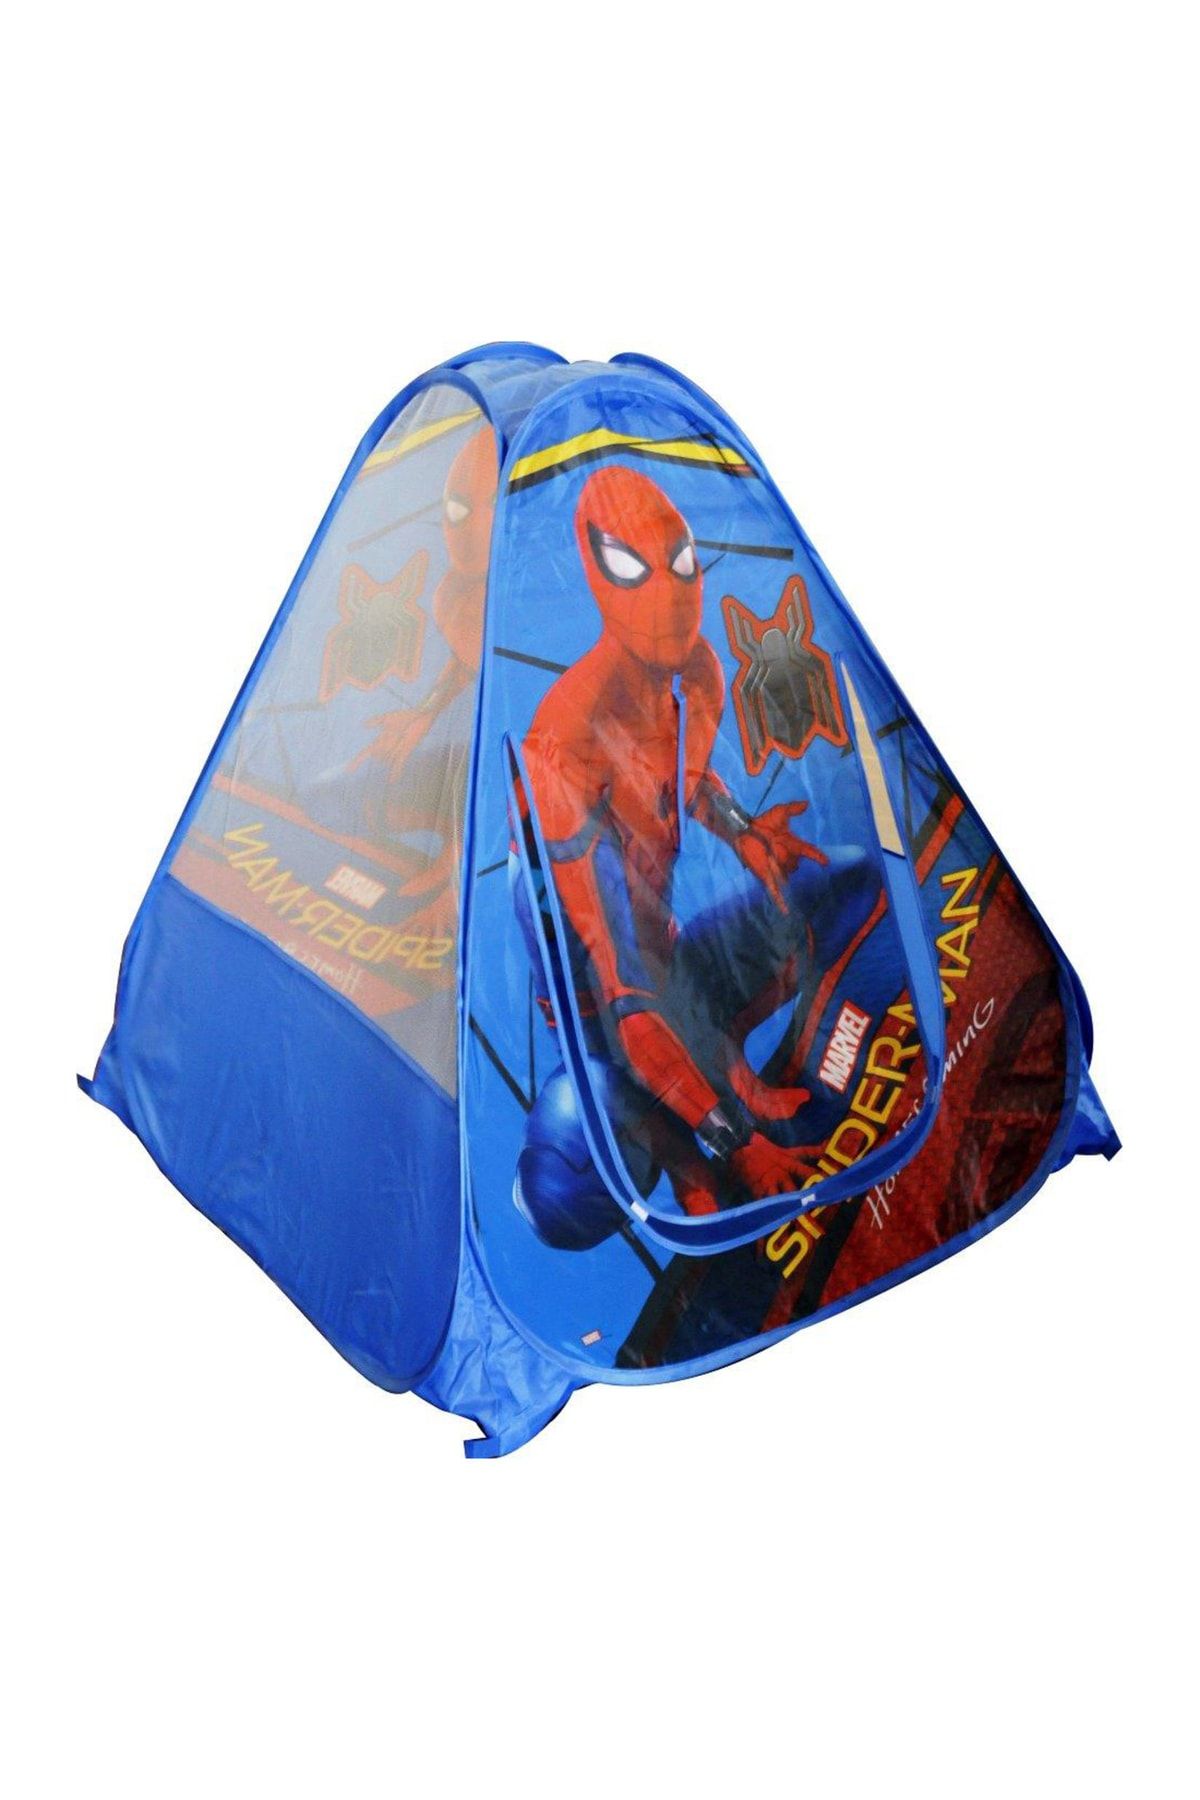 RockerStore Mercan Spiderman Pop-up Çadır Çantalı Oyun Çadırı